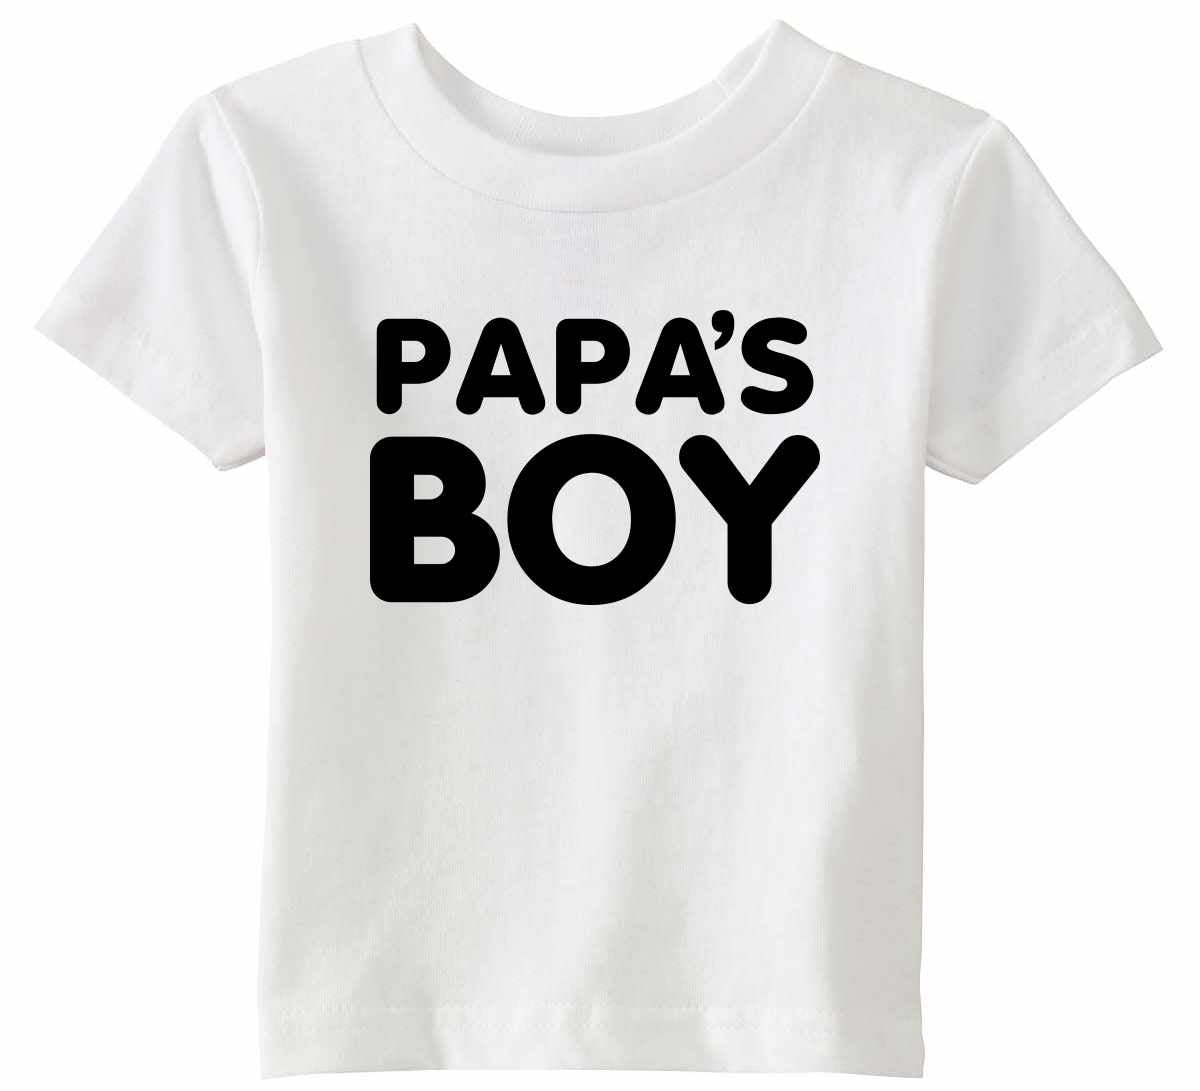 Papa's Boy on Infant-Toddler T-Shirt (#1217-7)